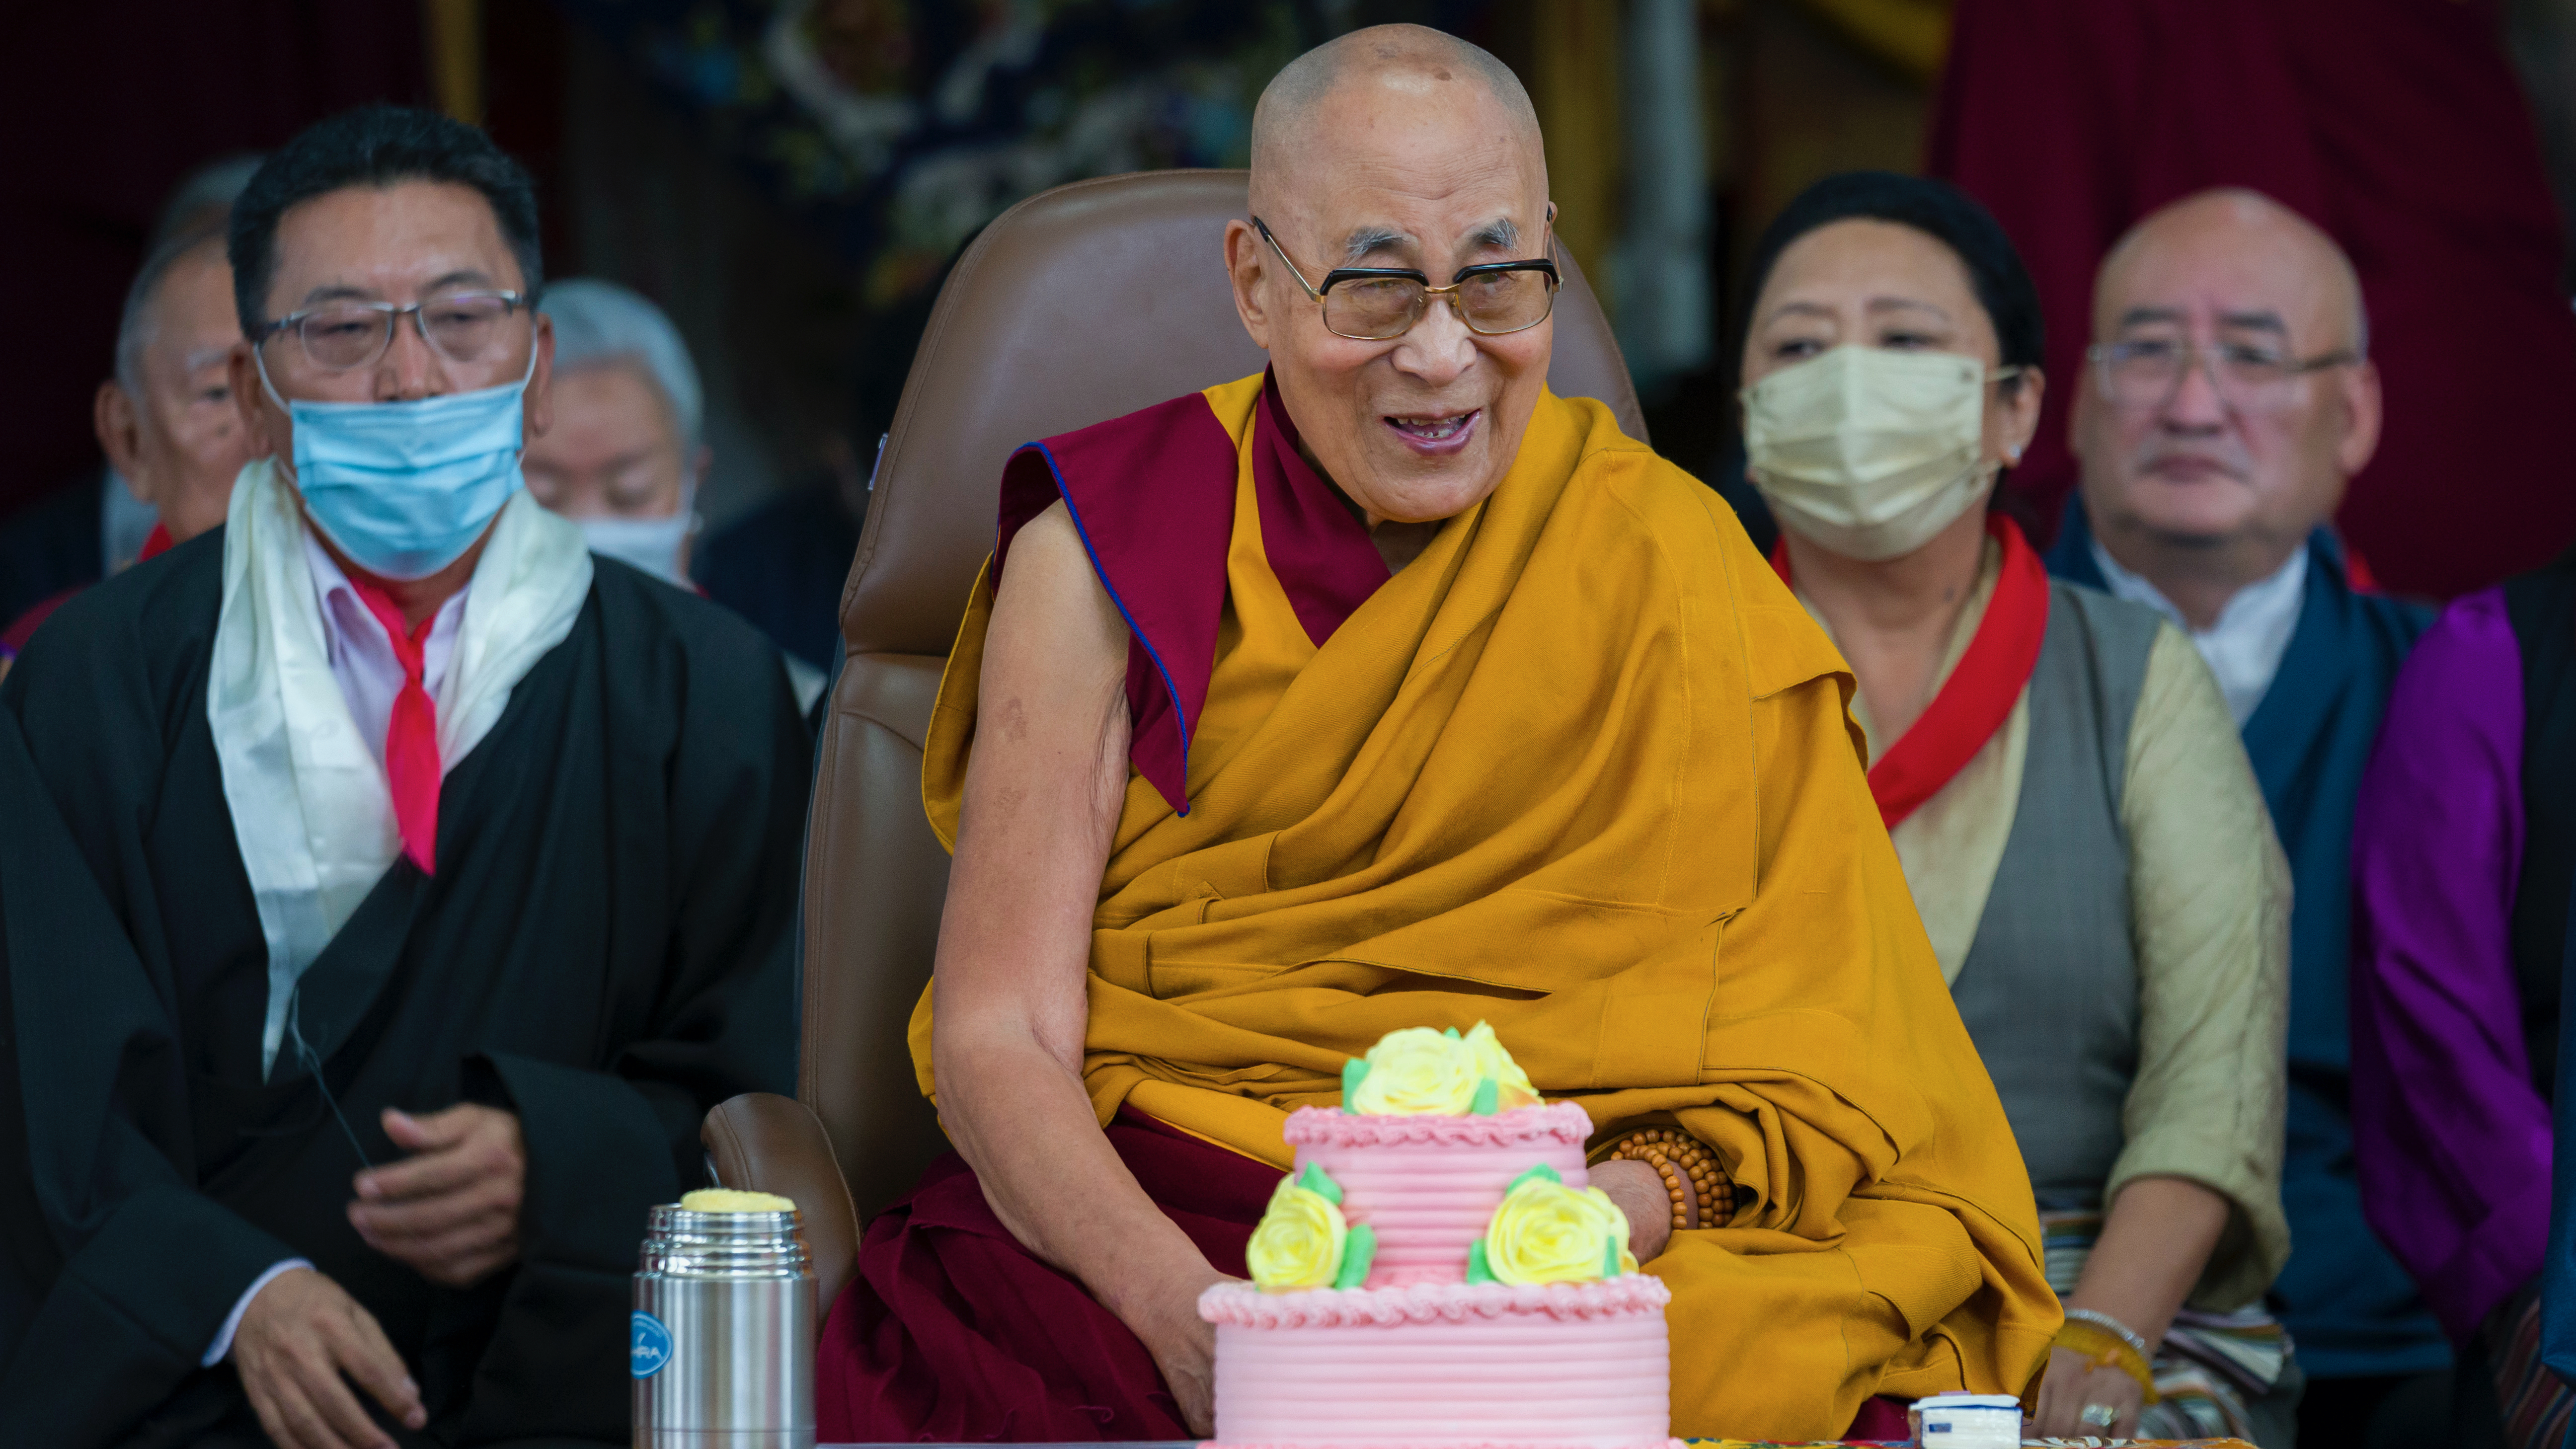 Dalai Lama and cake